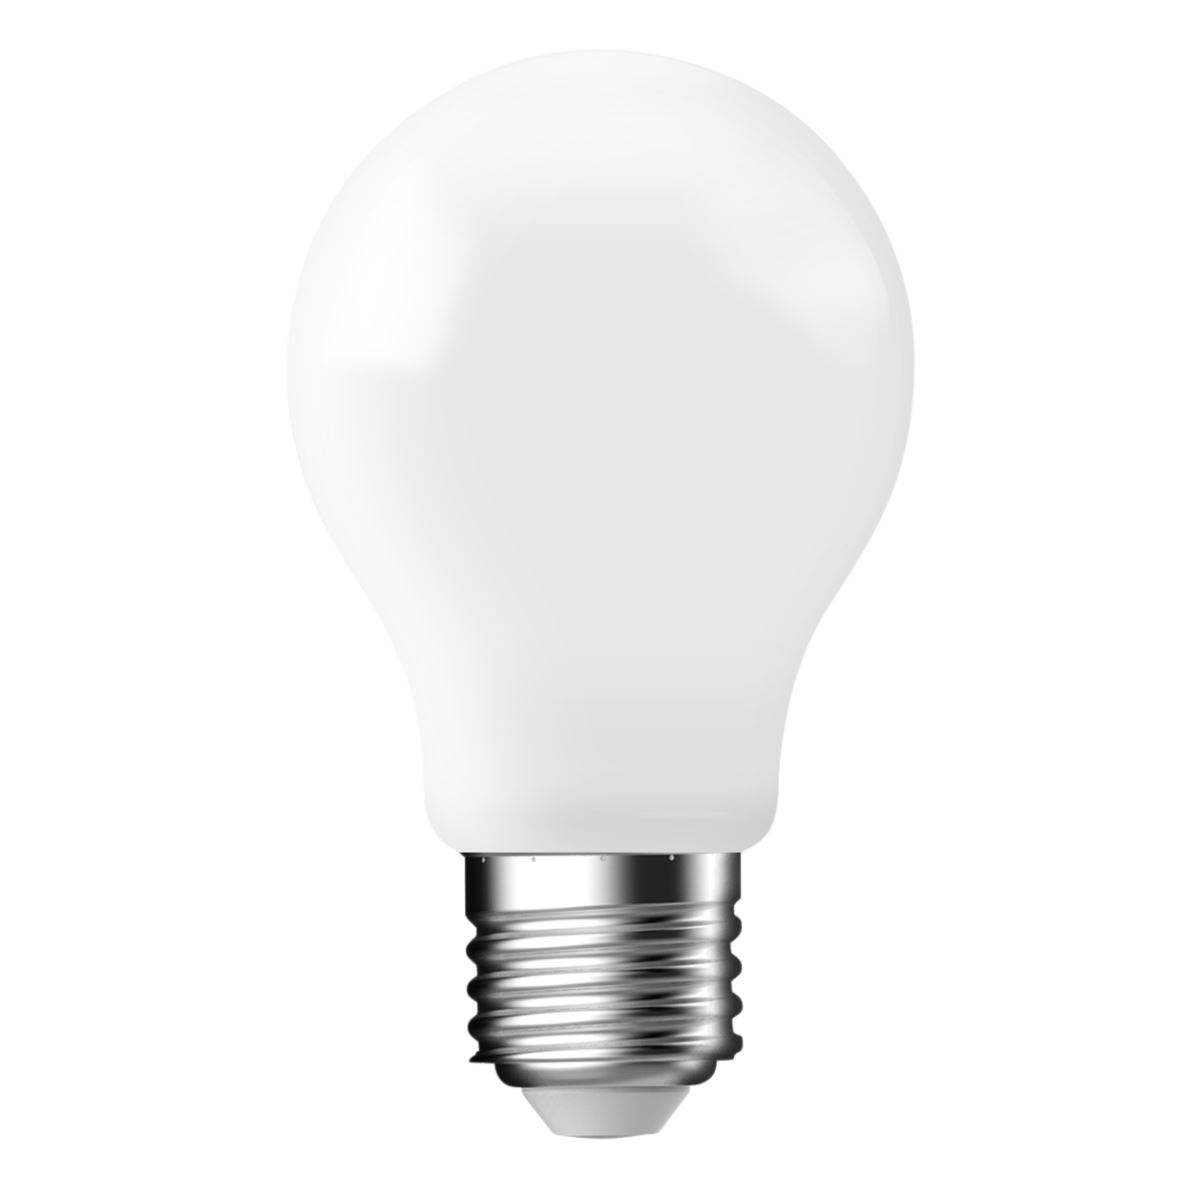 Nordlux Energetic LED Leuchtmittel E27 A60 Filament weiß 806lm 2700K 8,3W 80Ra 360° dimmbar 6x6x10,4cm von Energetic